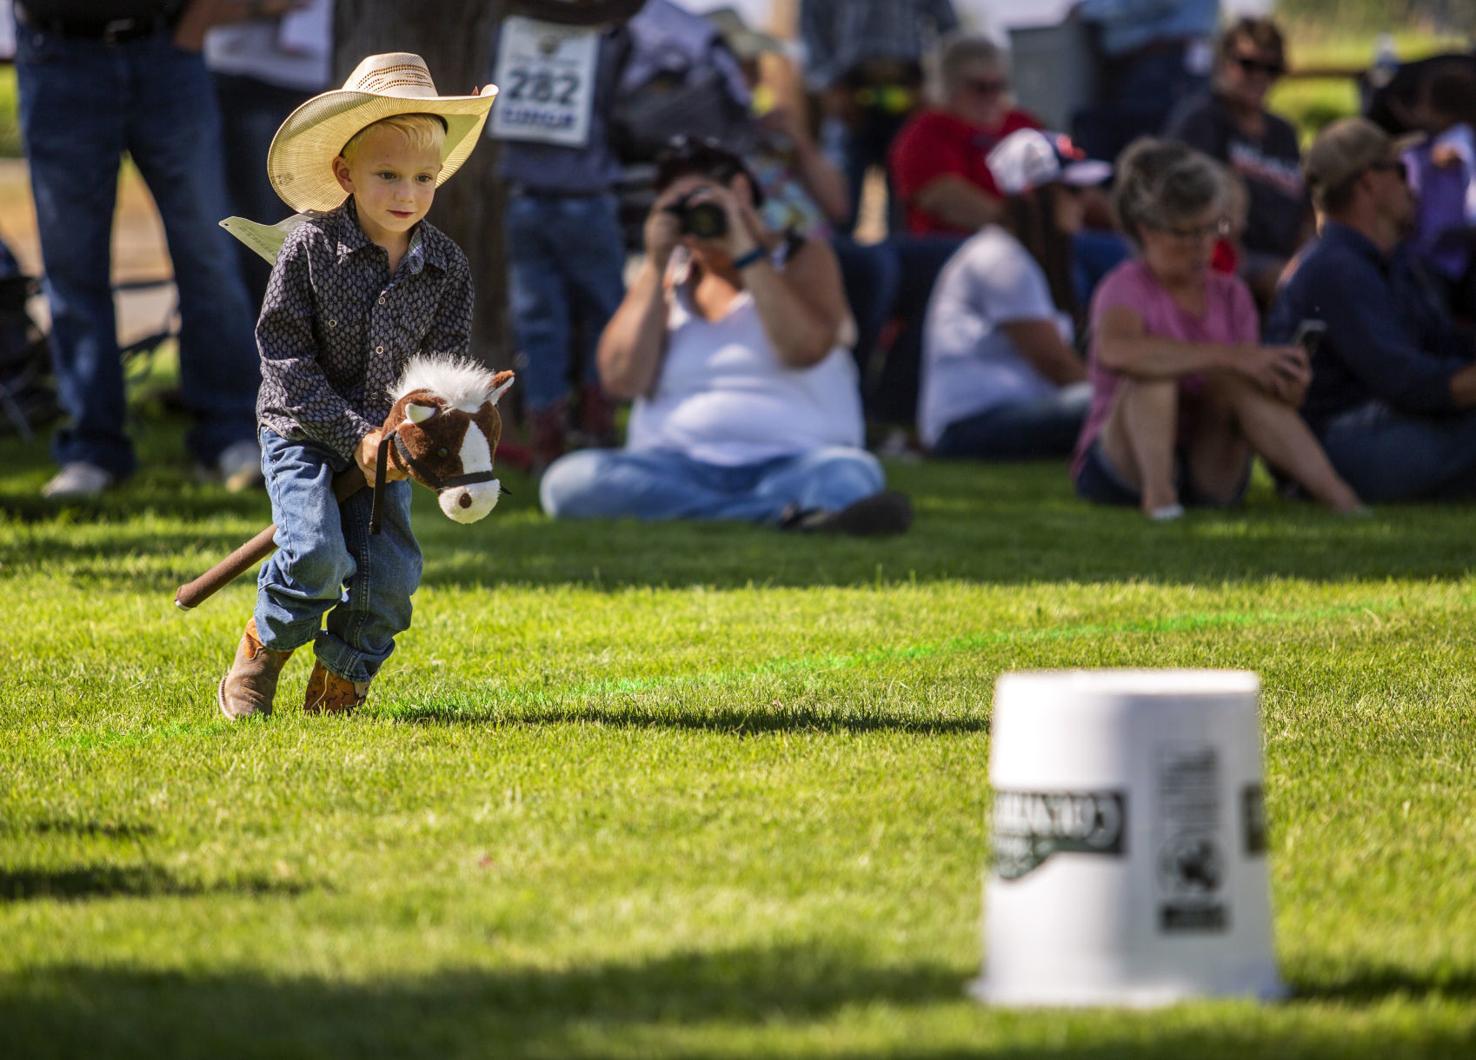 PHOTOS: Jr. Rodeo at the Gooding County Fair